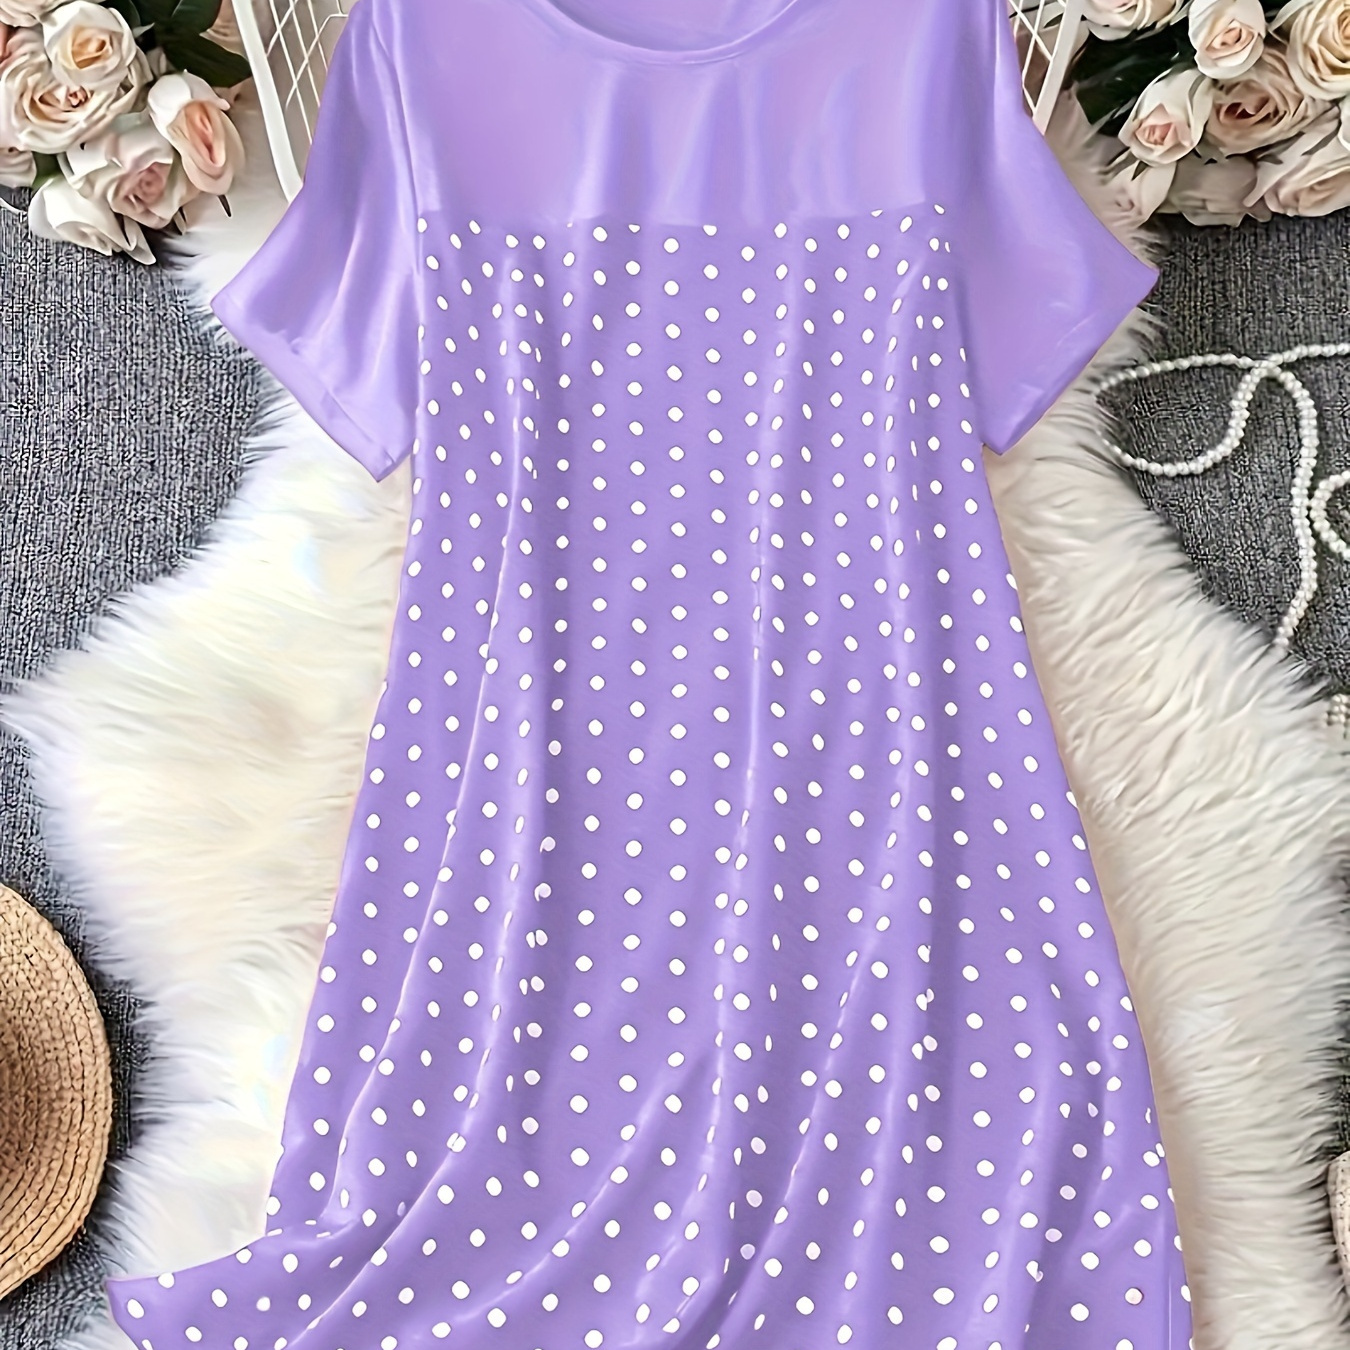 

Women's Plus Casual Nightdress, Plus Size Polka Dot Print Short Sleeve Round Neck Sleep Dress